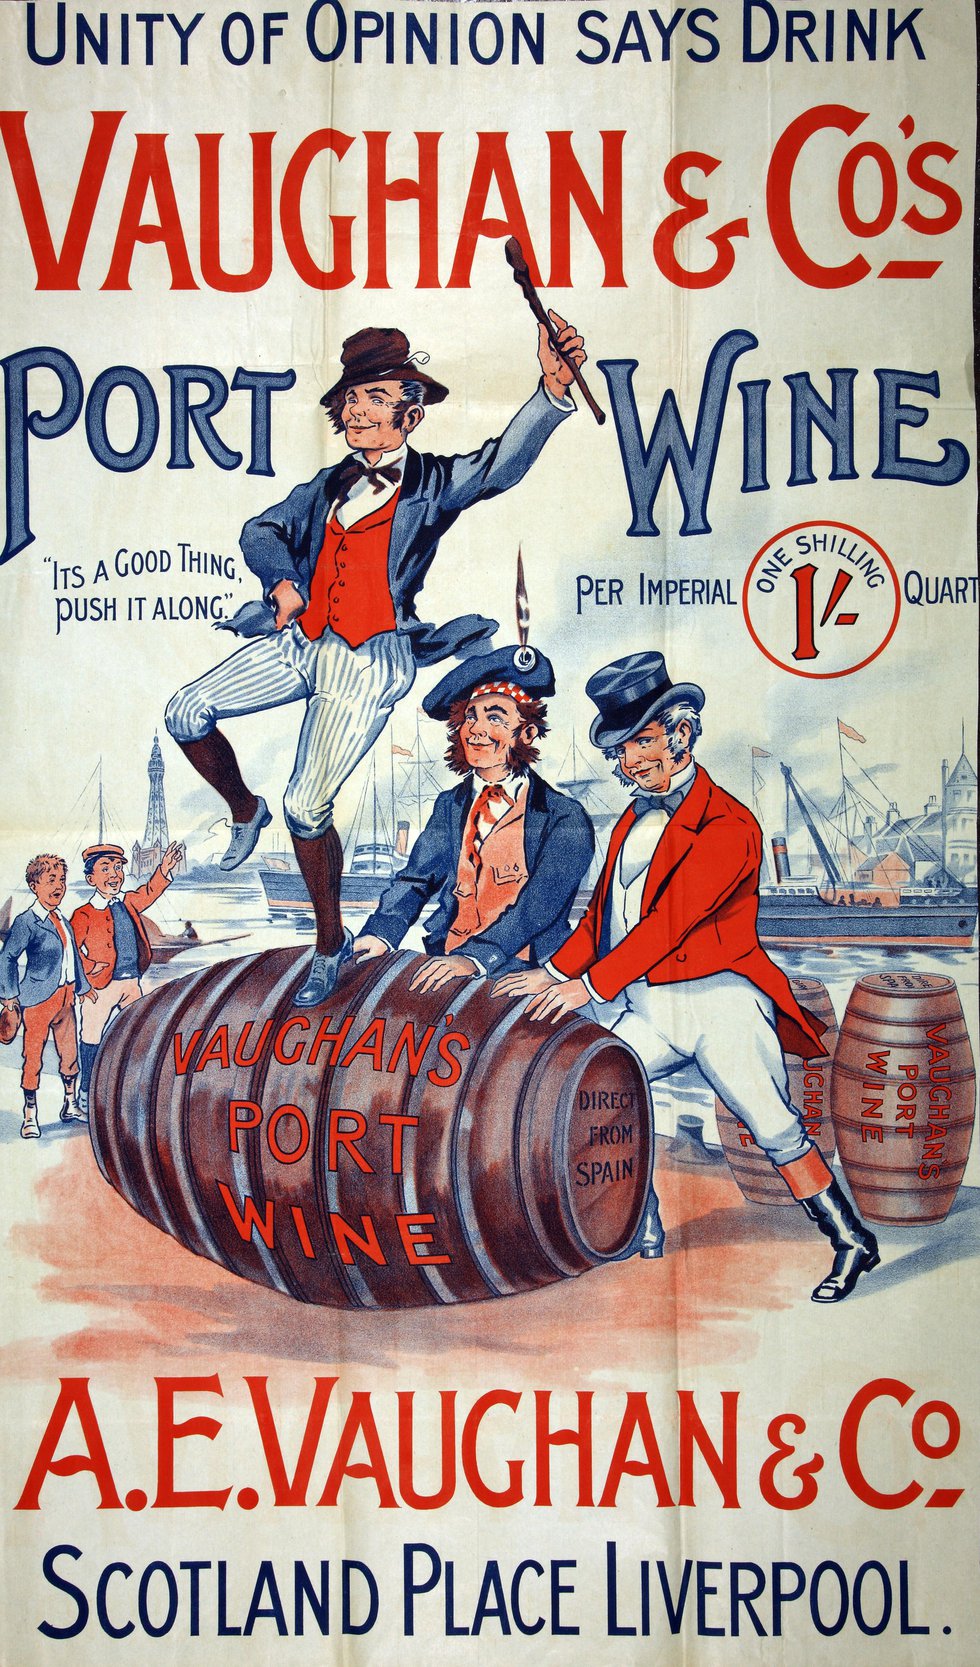 Wine - 1120 - Britain.jpg